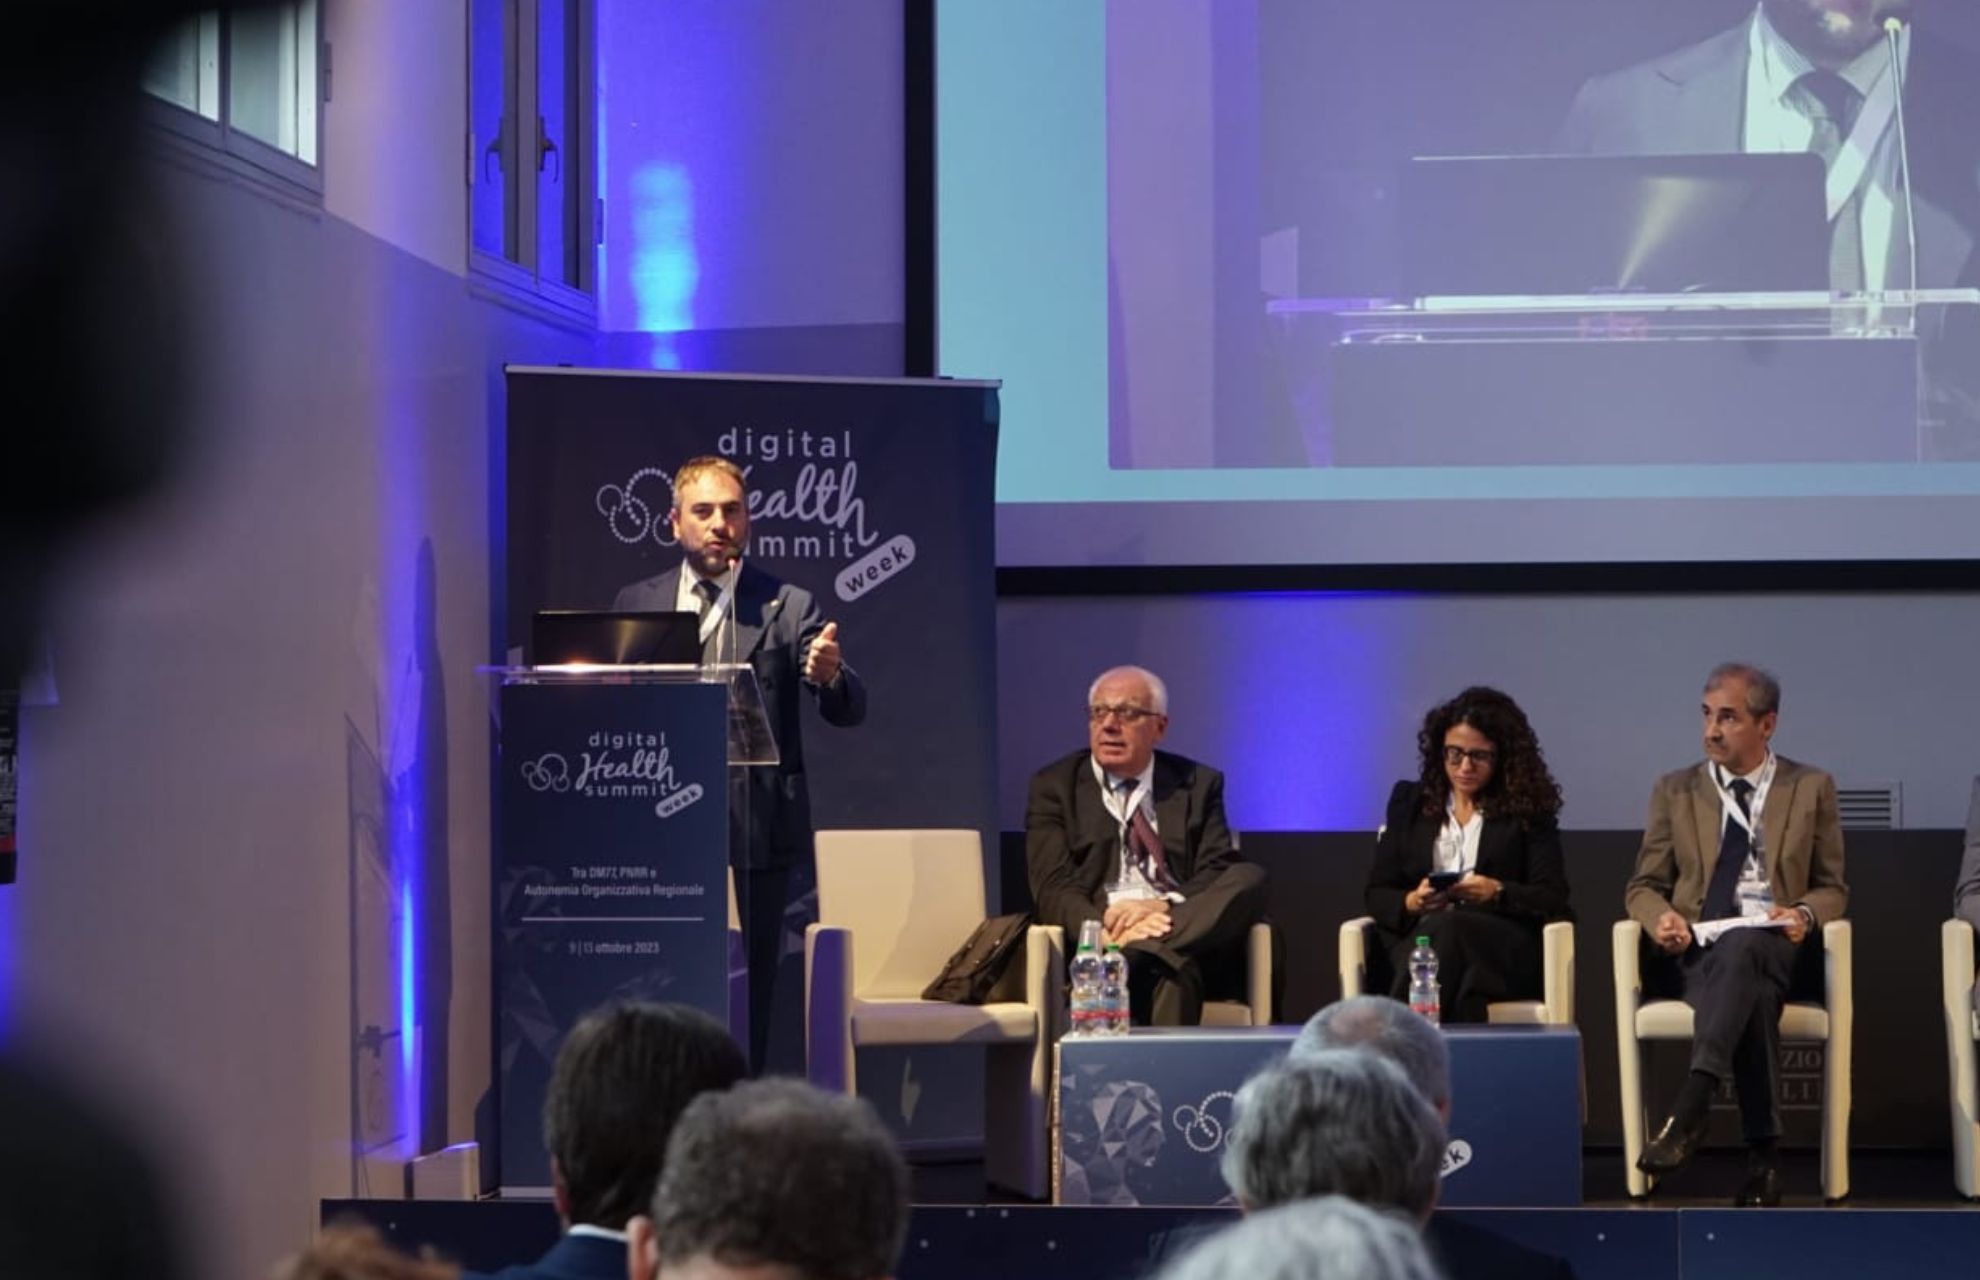 La Asl di Sassari al convegno Digital health summit di Milano